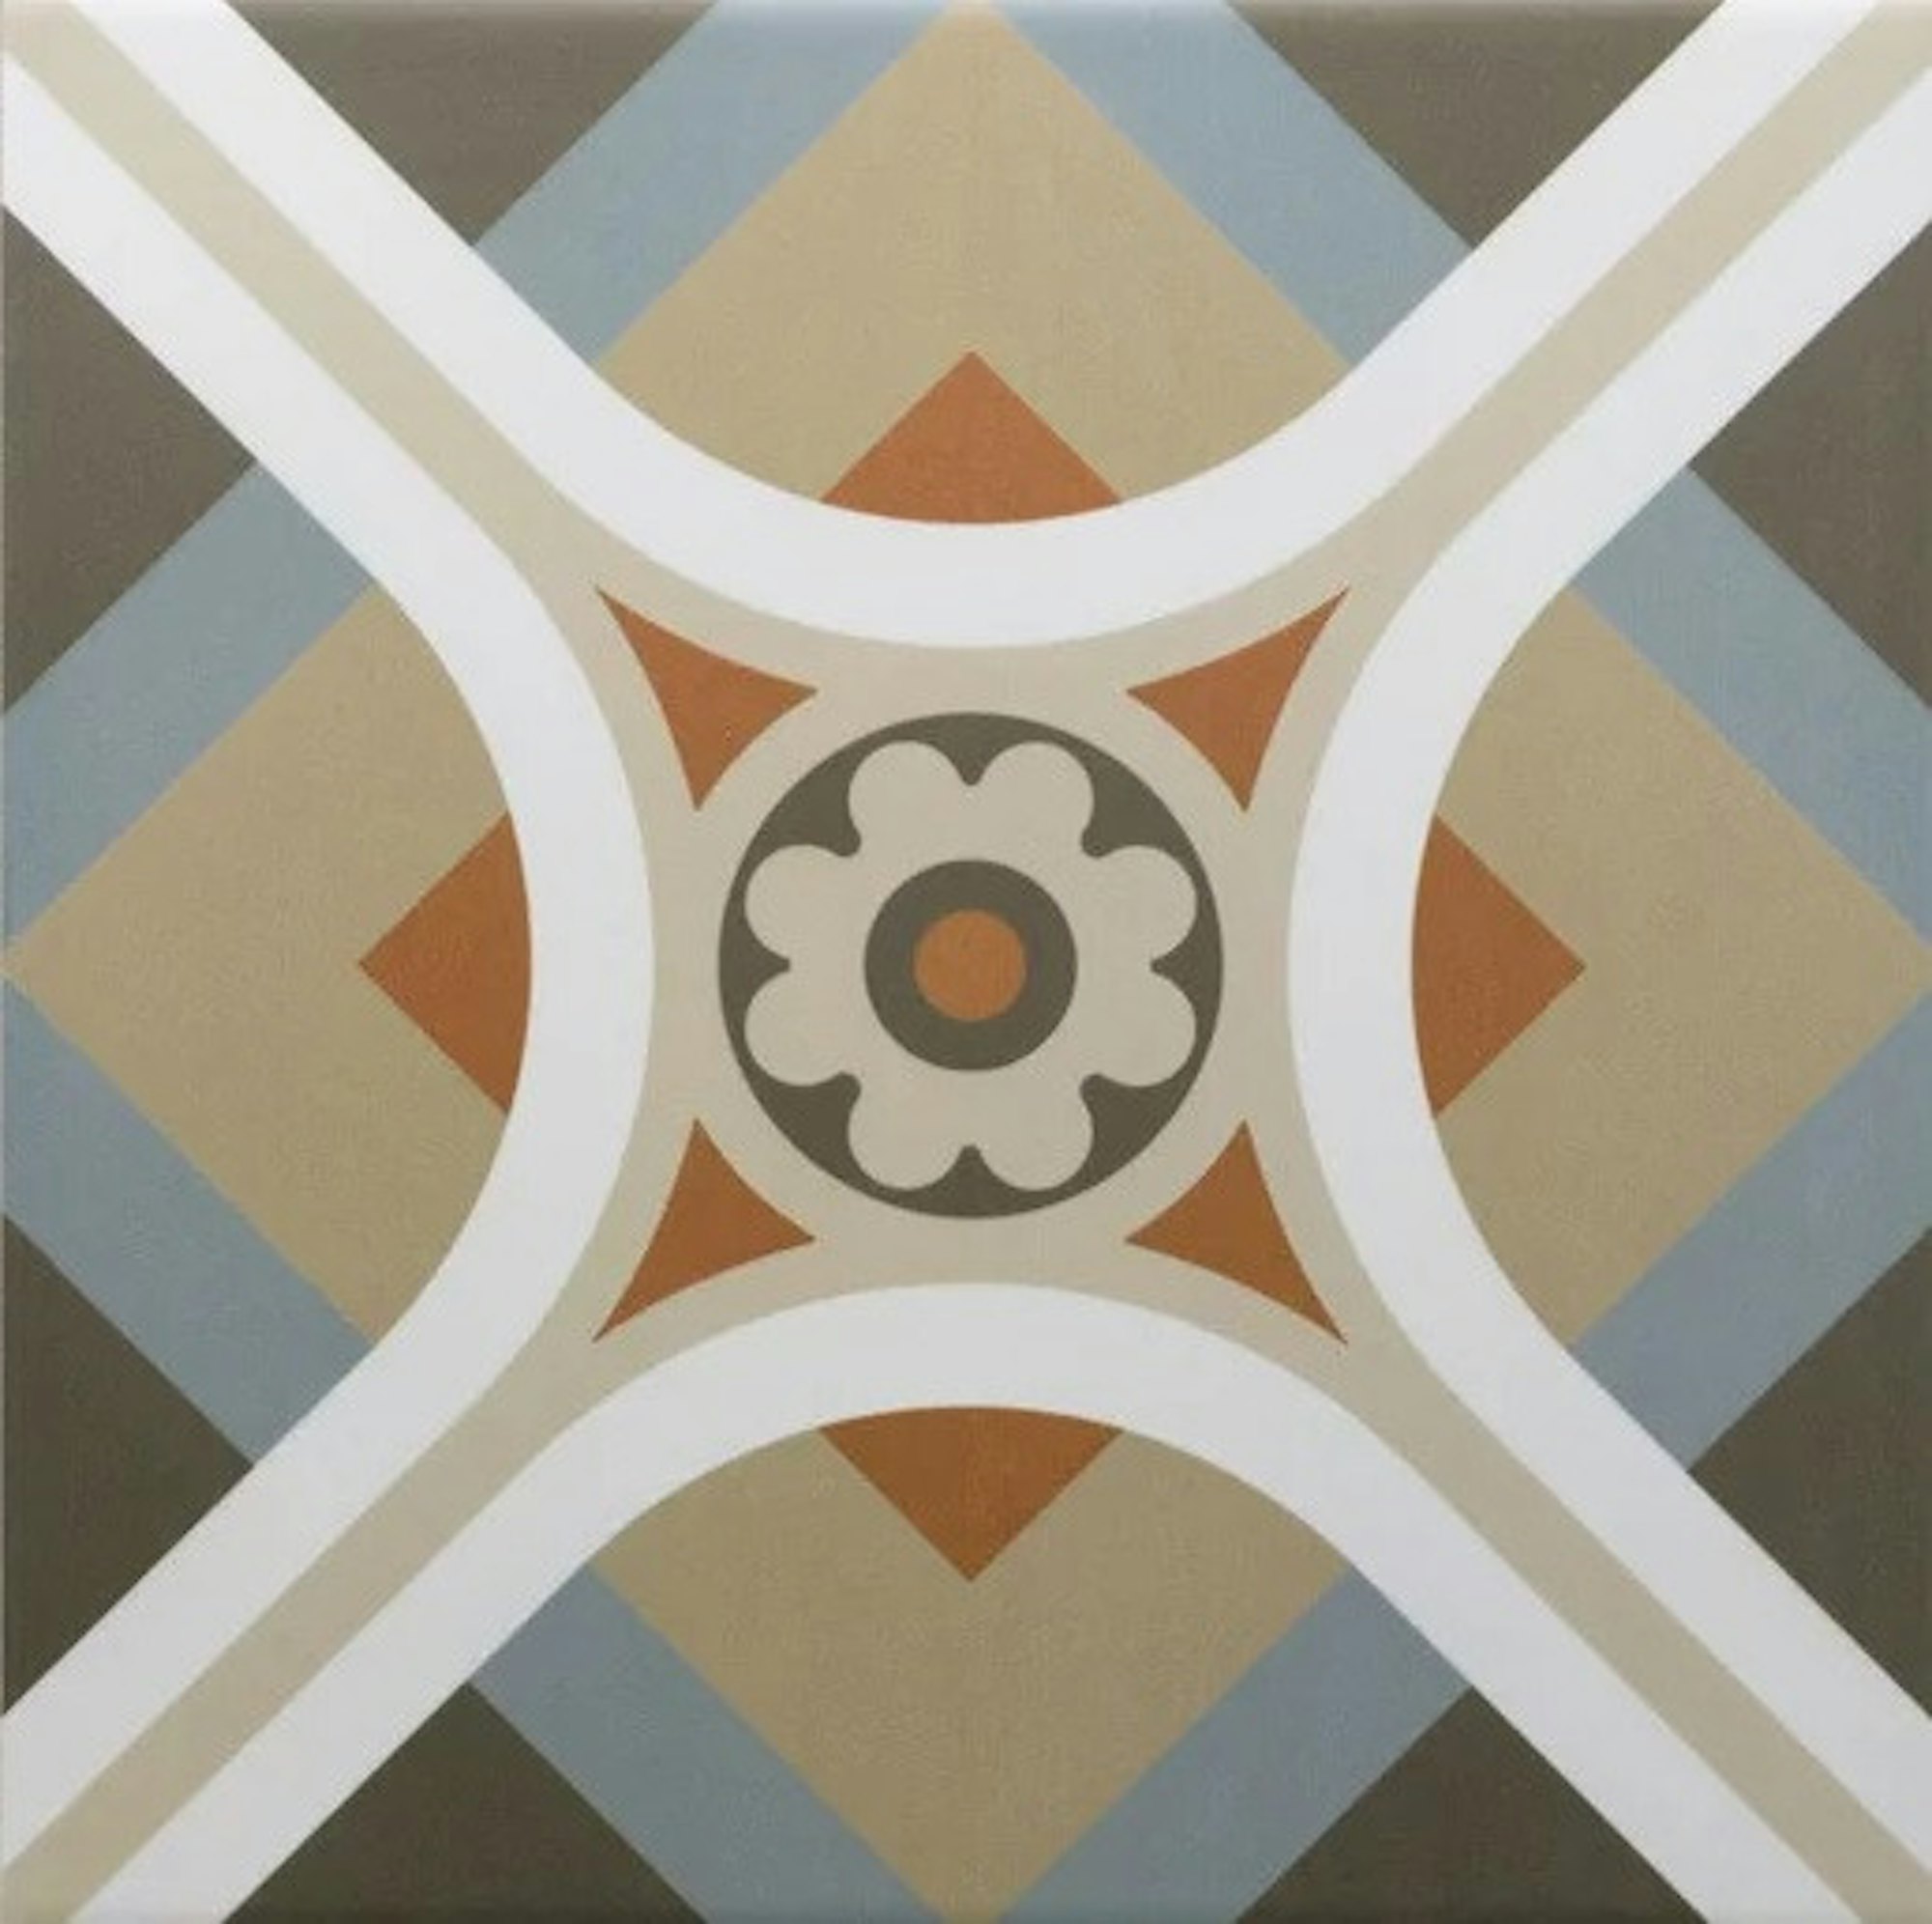 Middleham Redmire Patterned Tile